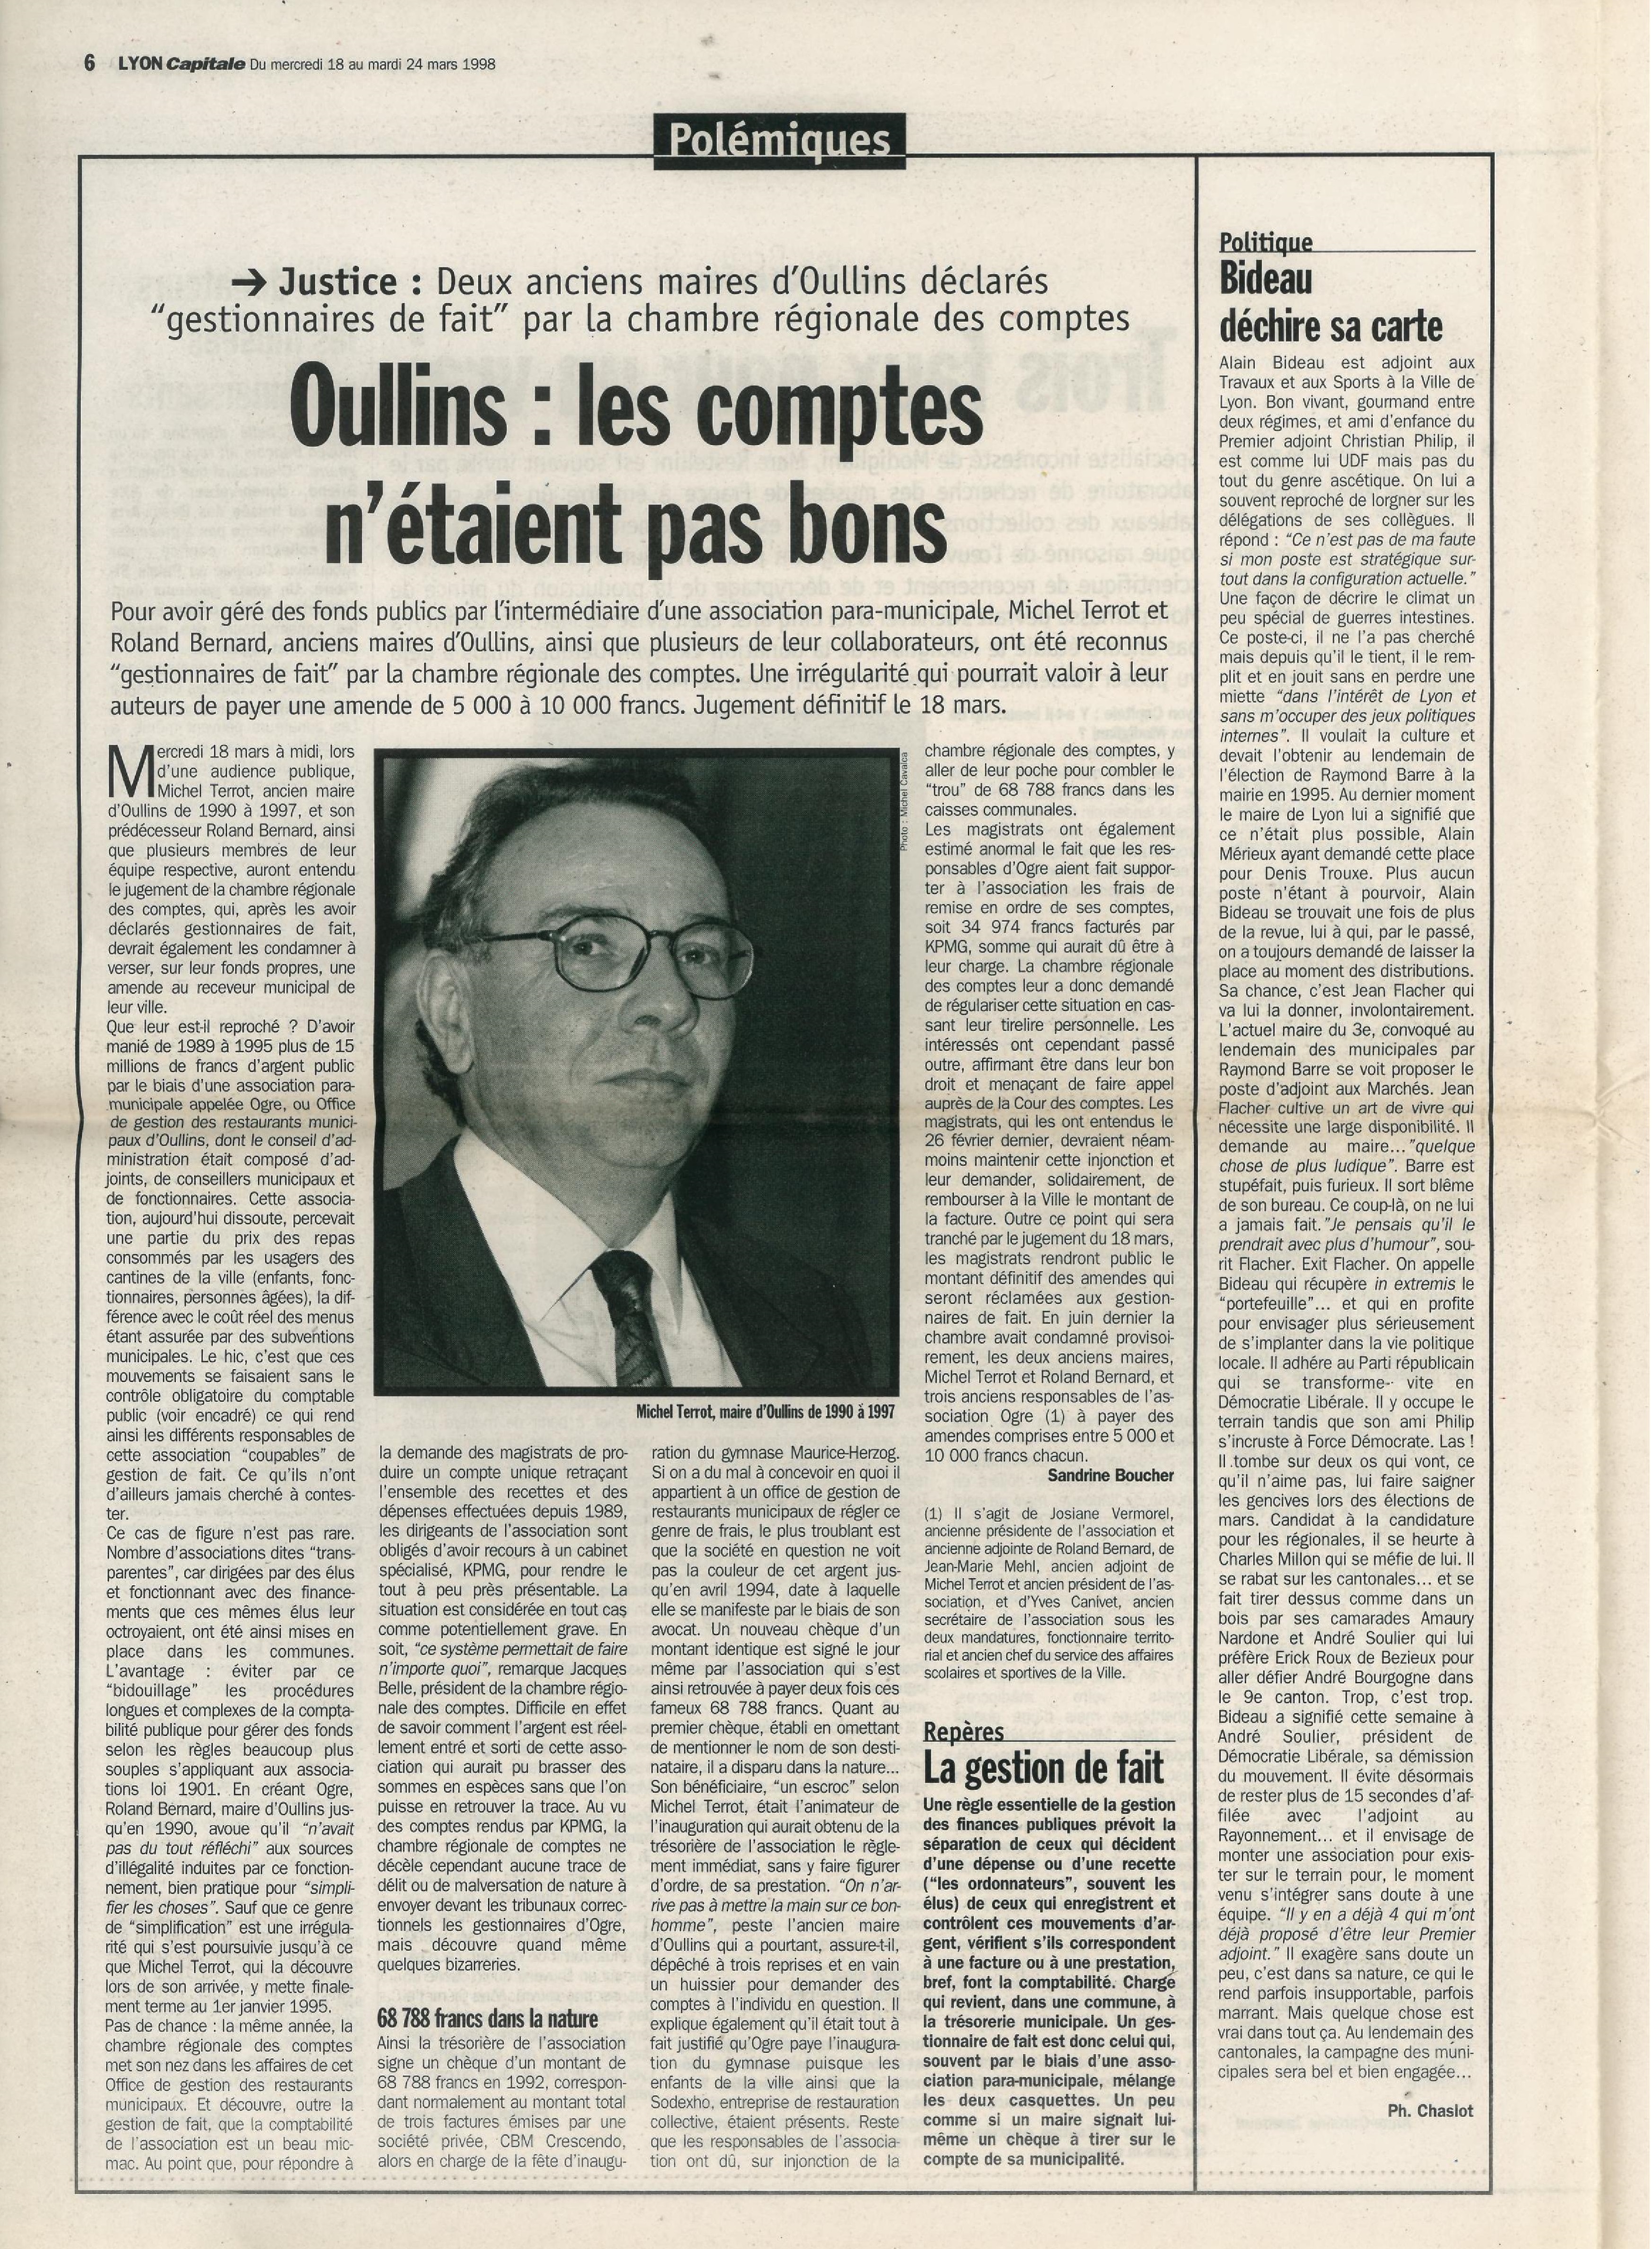 Lyon Capitale n°163, 18 mars 1998, p. 6 © Lyon Capitale